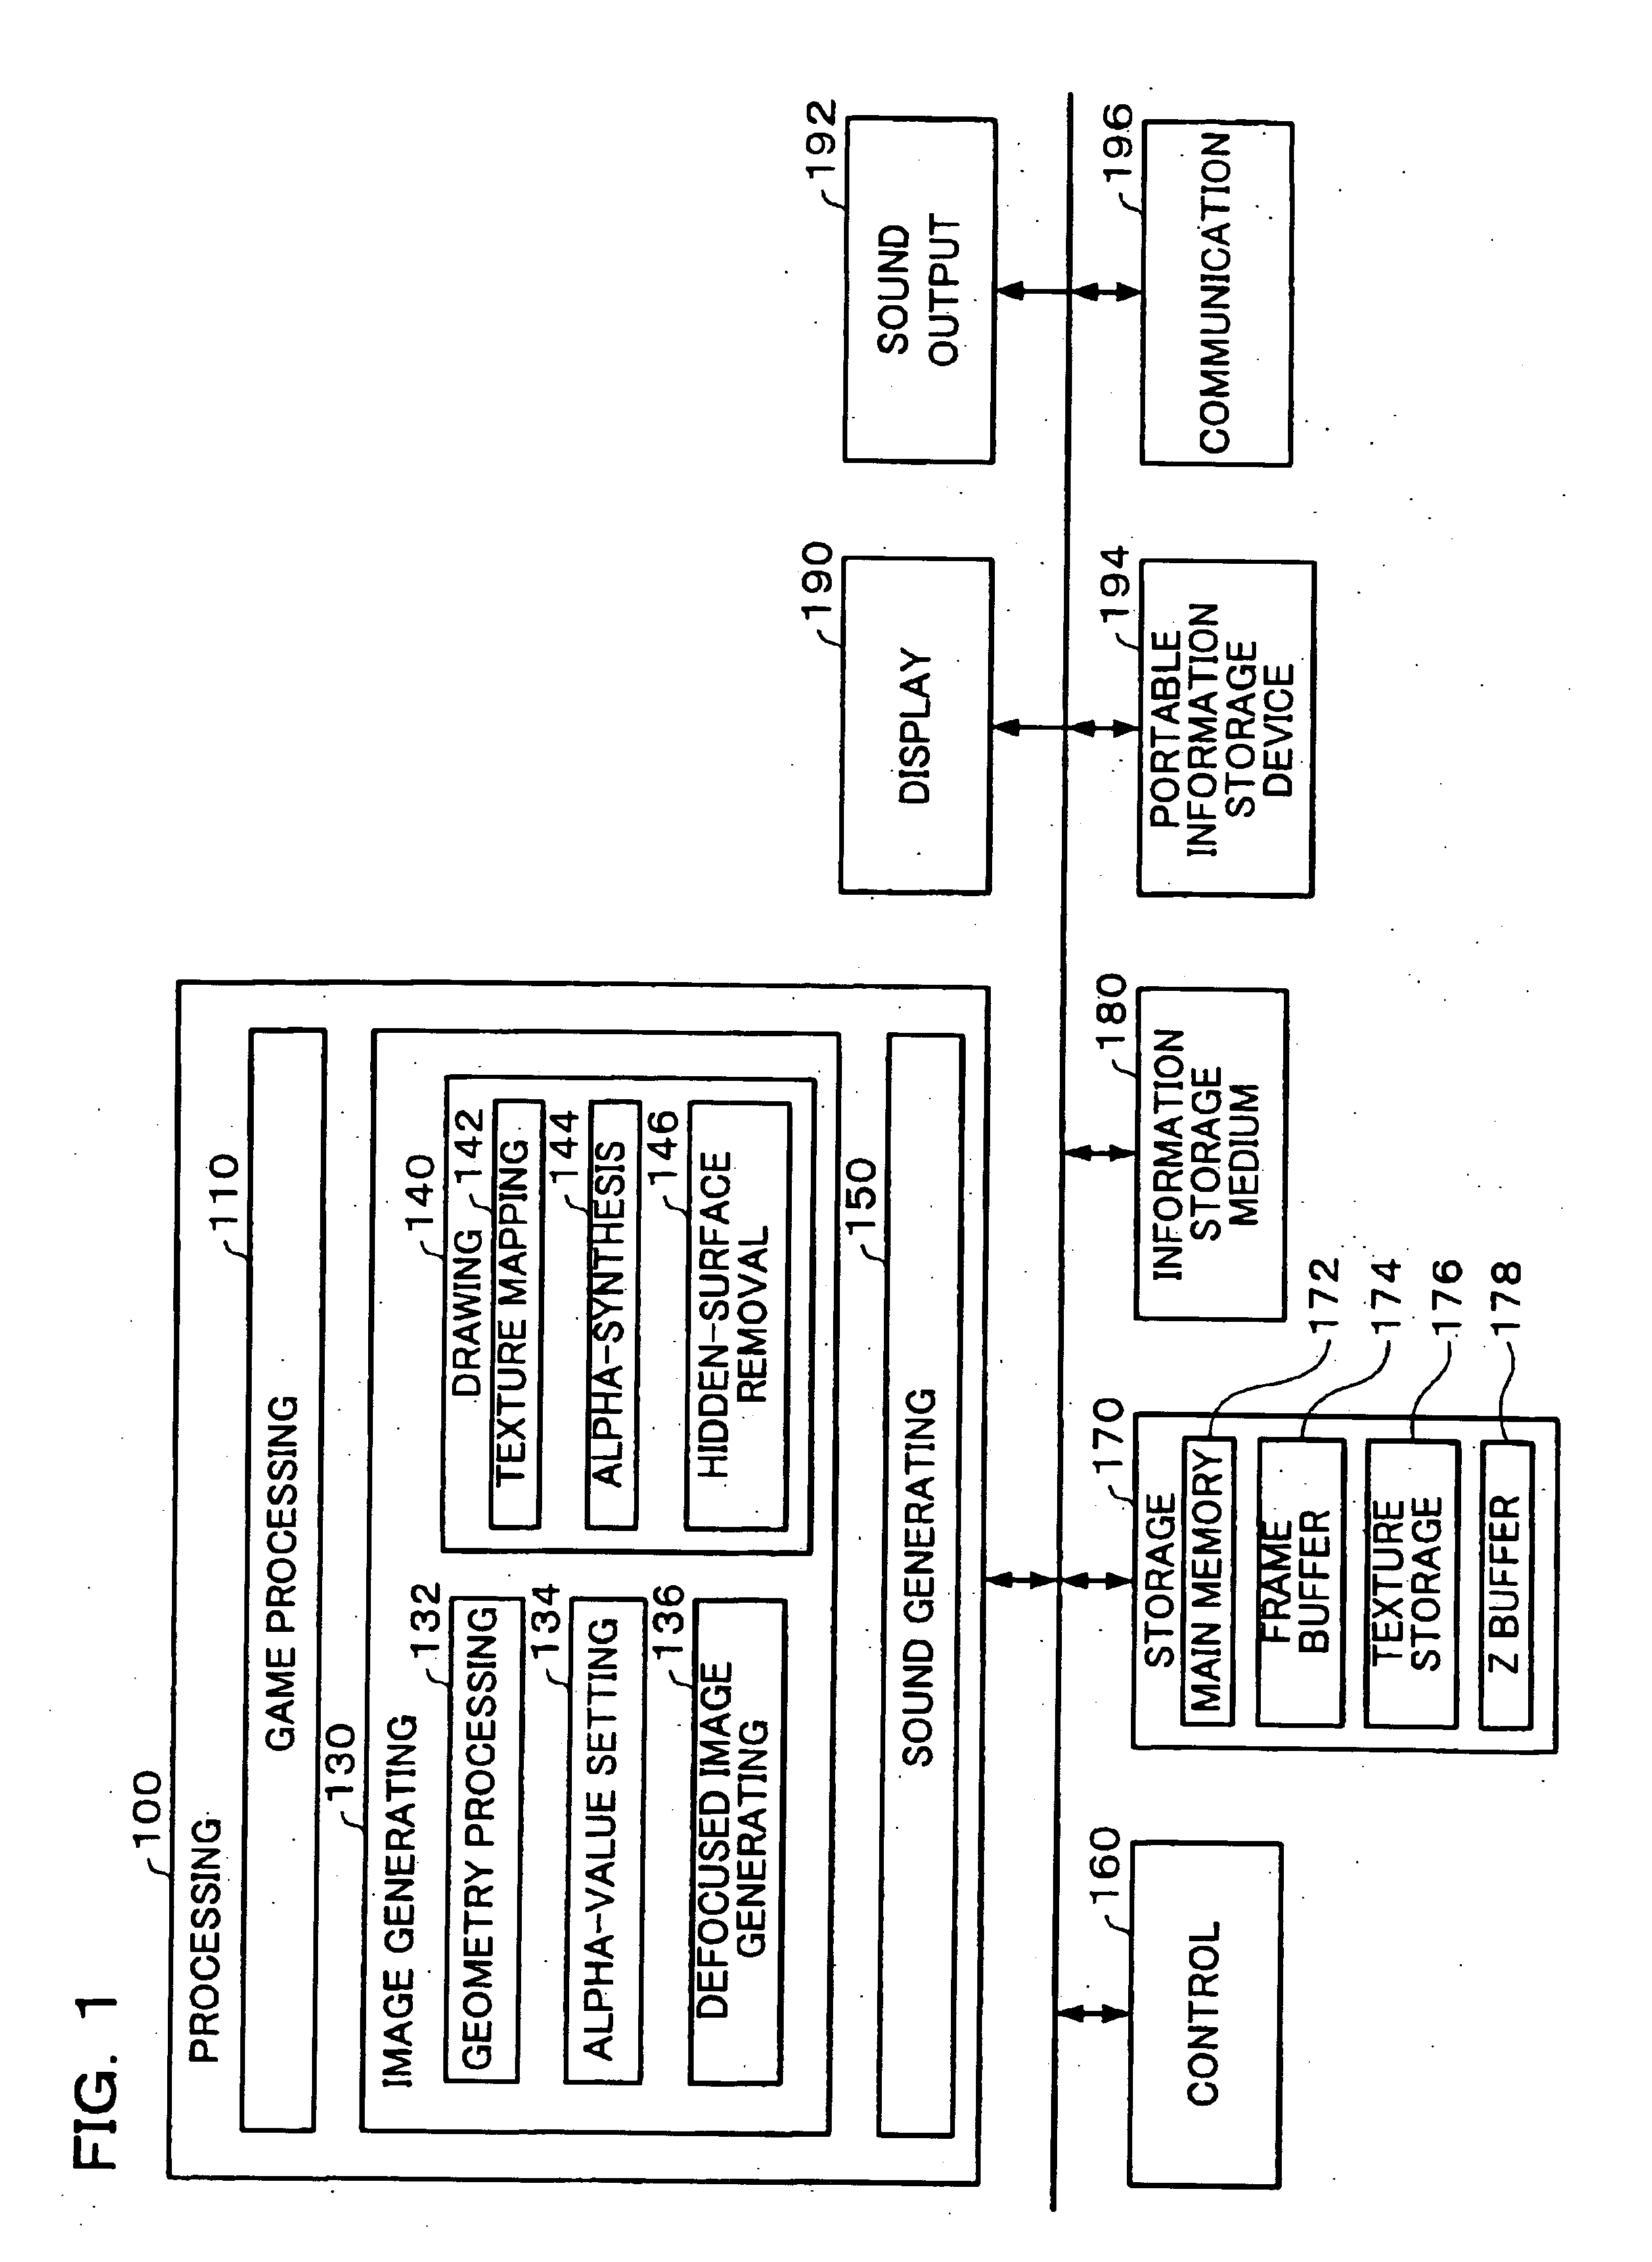 Image generating system and program